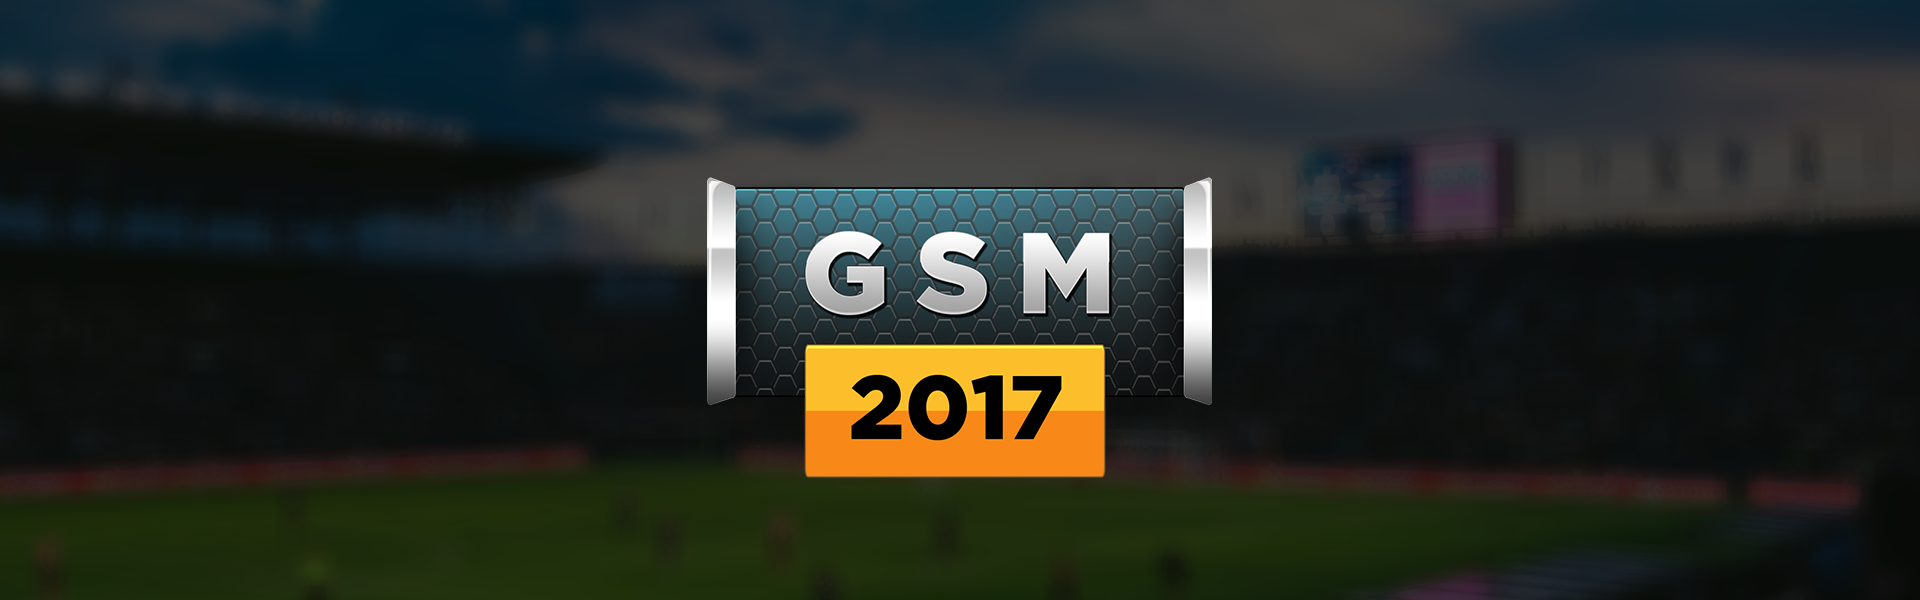 Global Soccer: A Management Game 2017